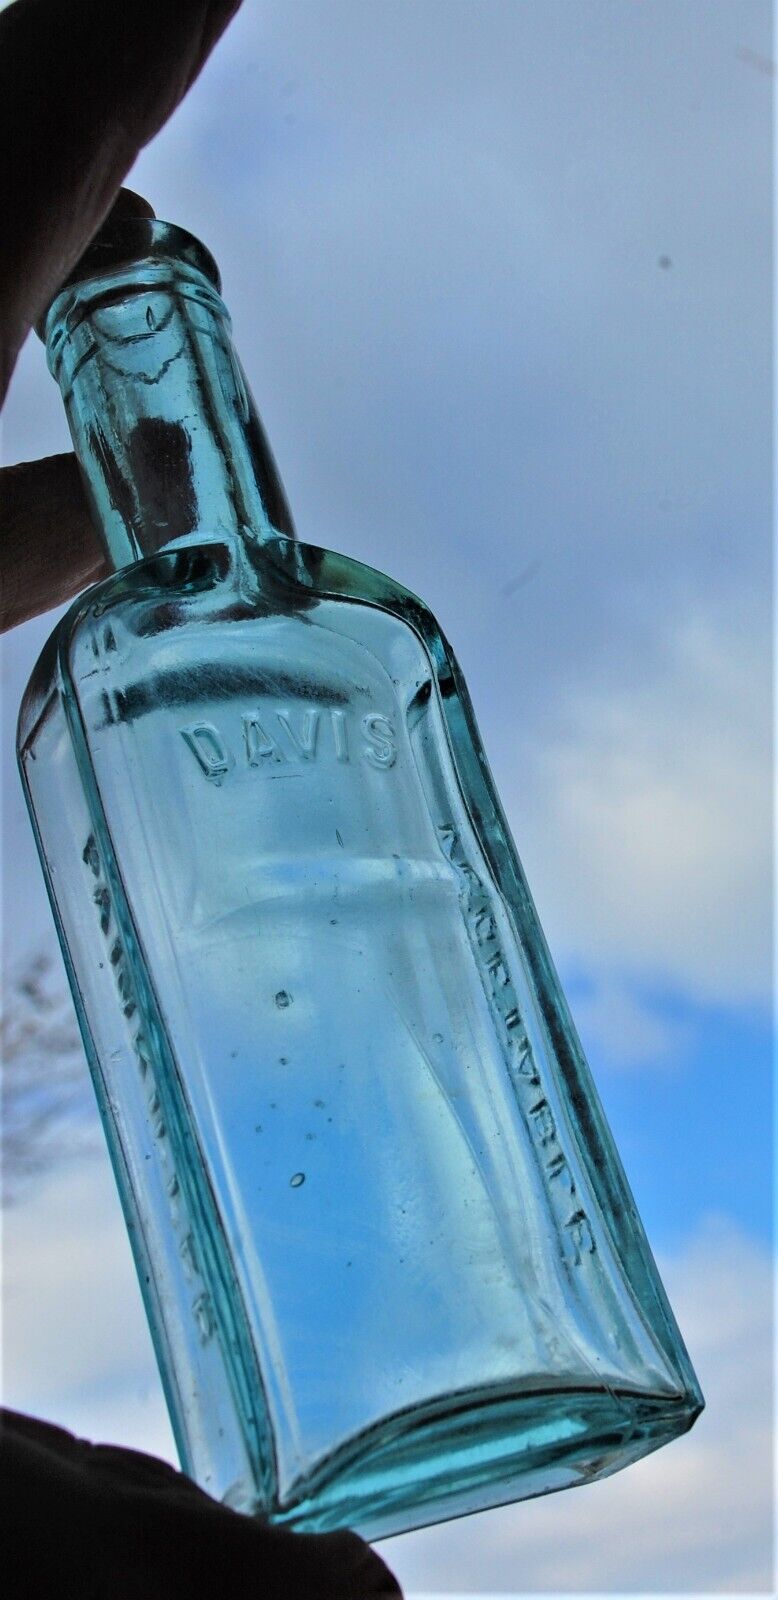 DAVIS VEGETABLE PAINKILLER, Post-Civil War Era bottle, near perfect condition